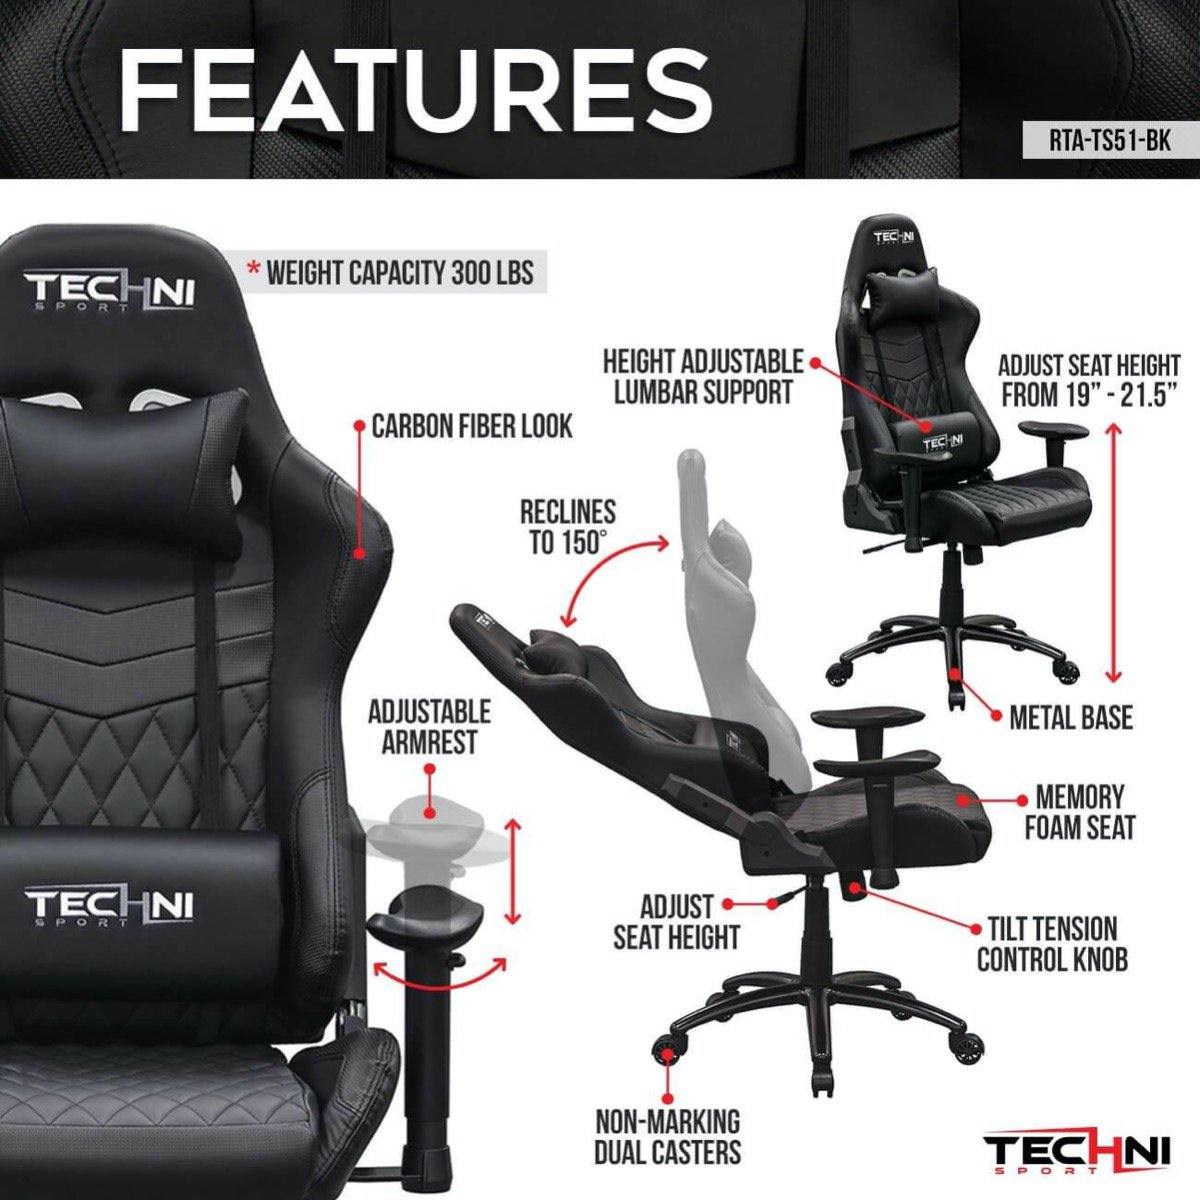 Techni Sport TS-5100 Black Ergonomic High Back Racer Style PC Gaming Chair RTA-TS51-BK Features